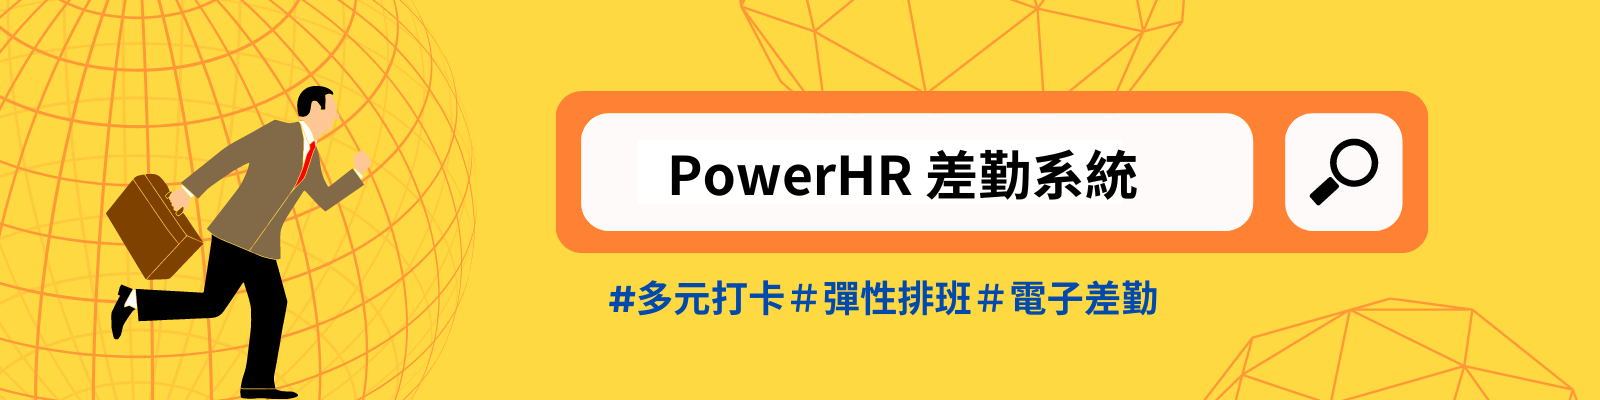 【HR】PowerHR差勤管理系統